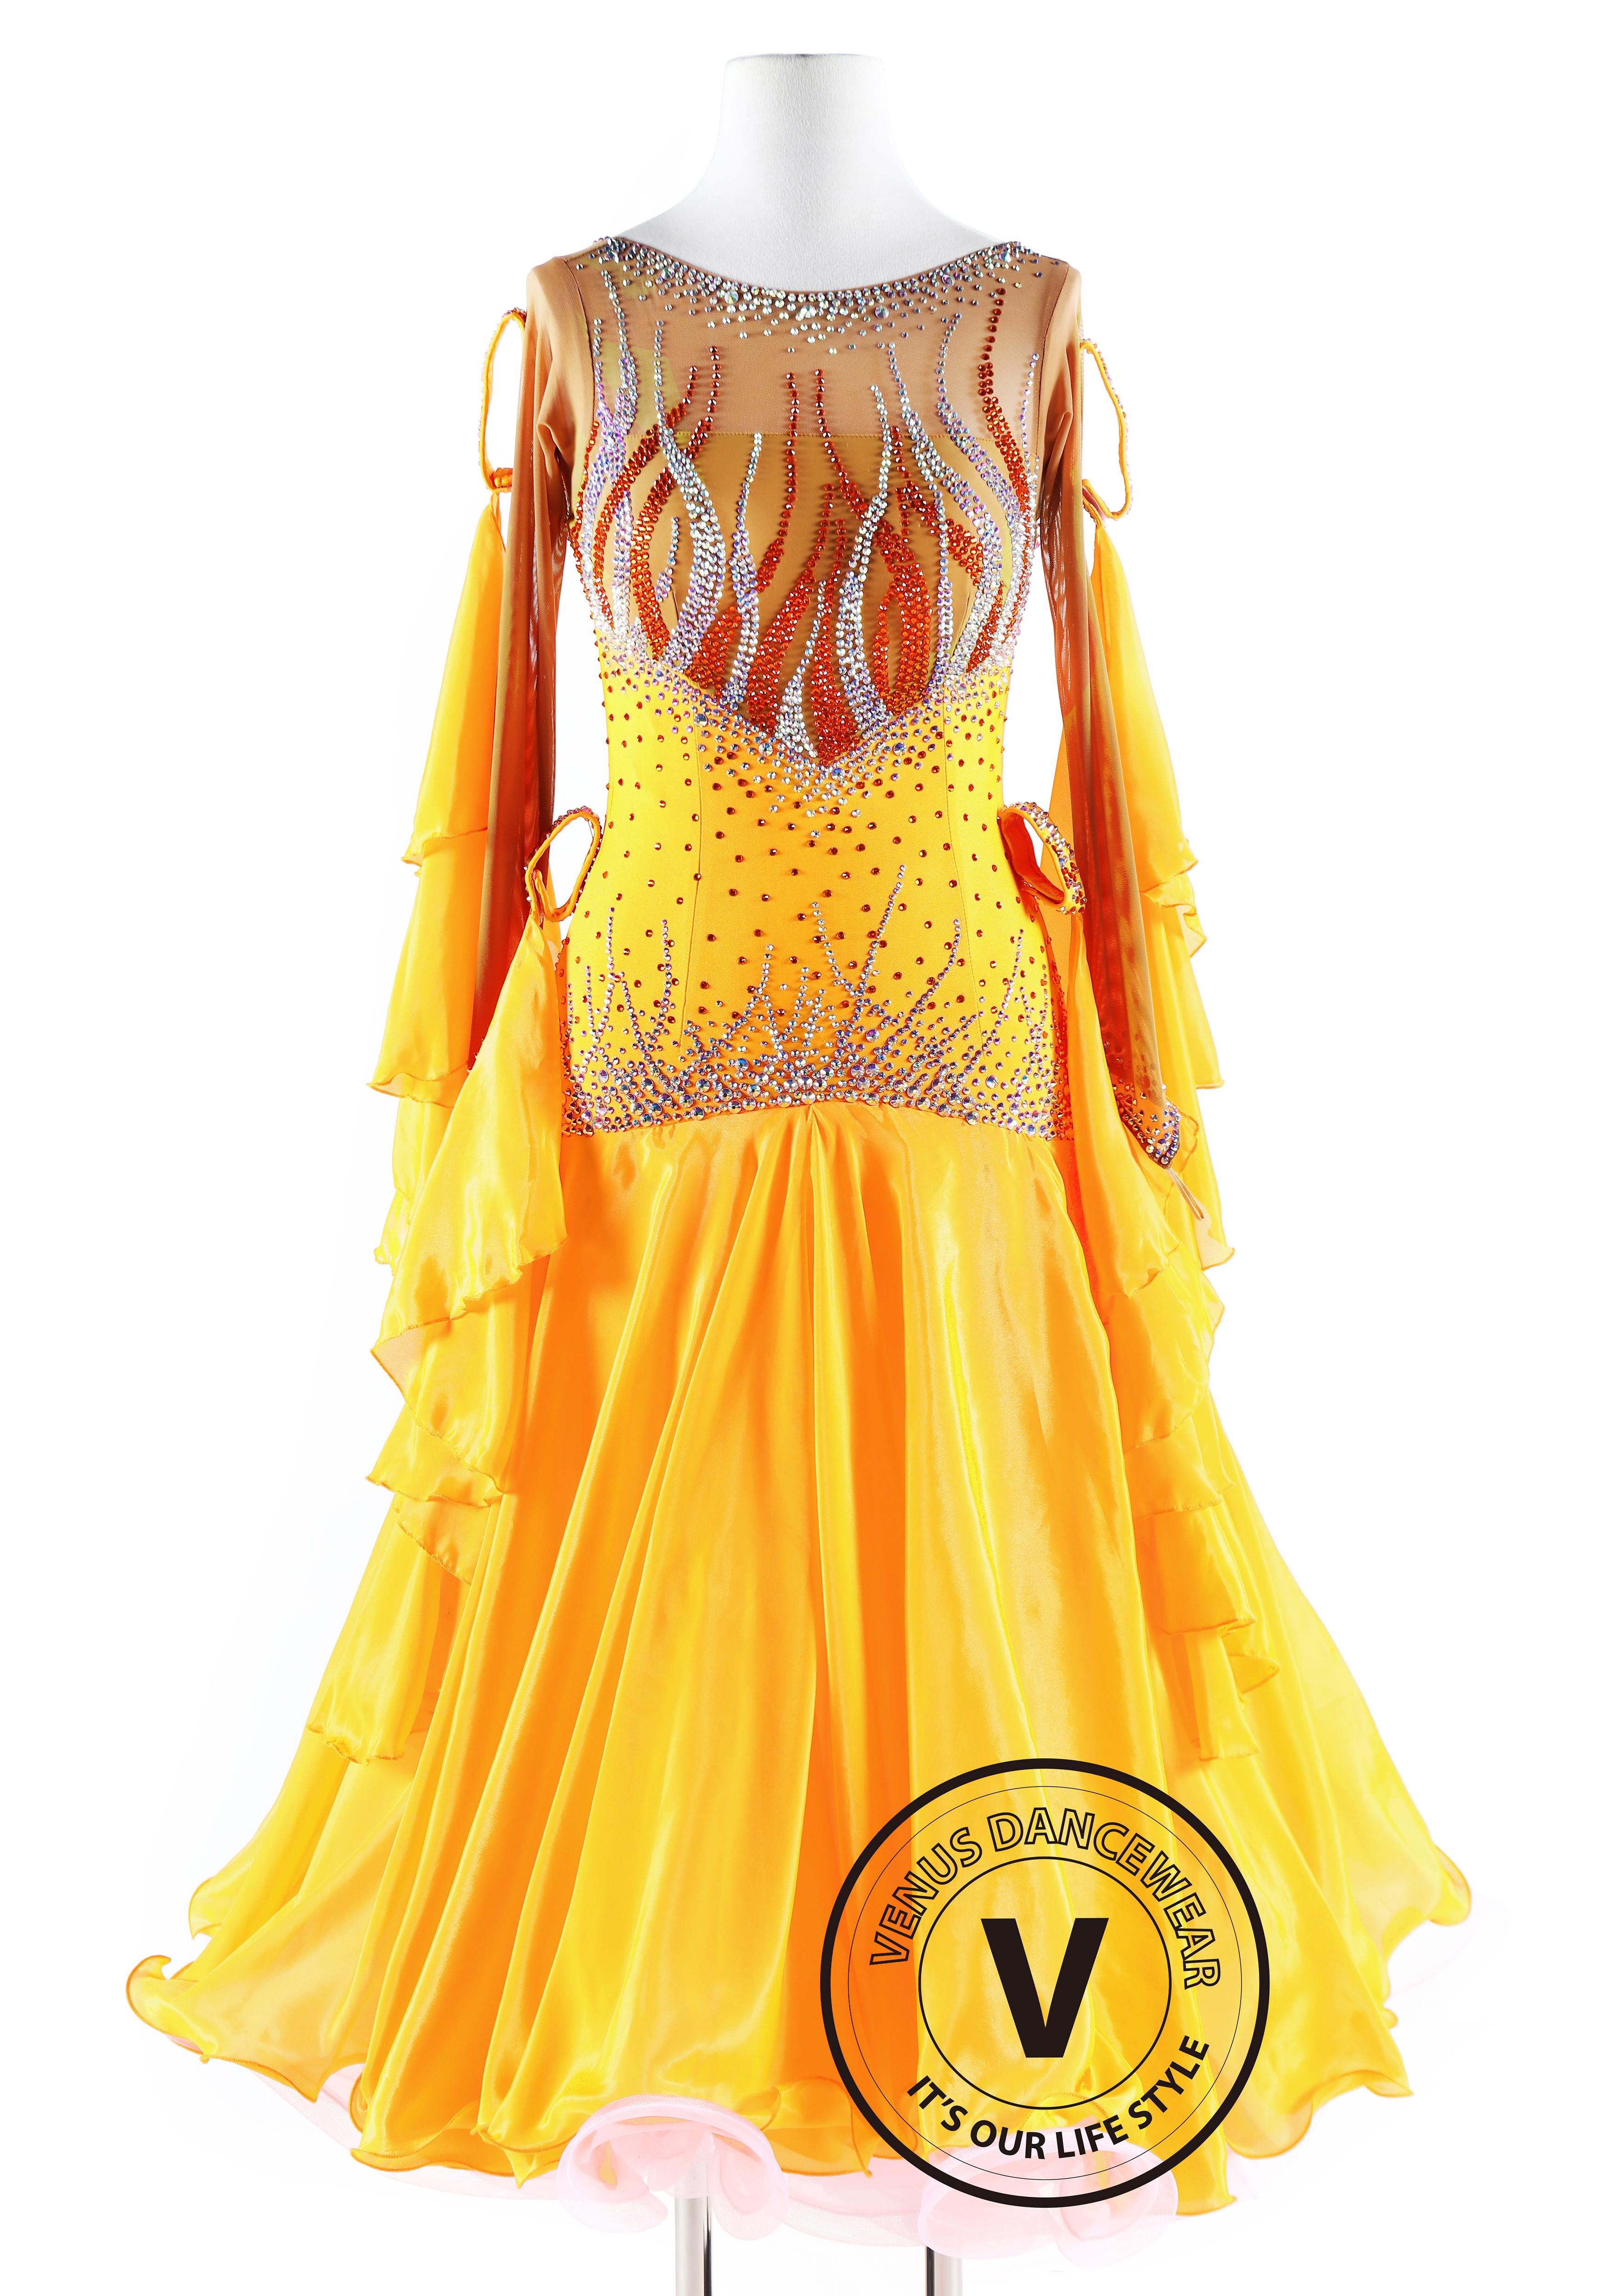 yellow ballroom gown